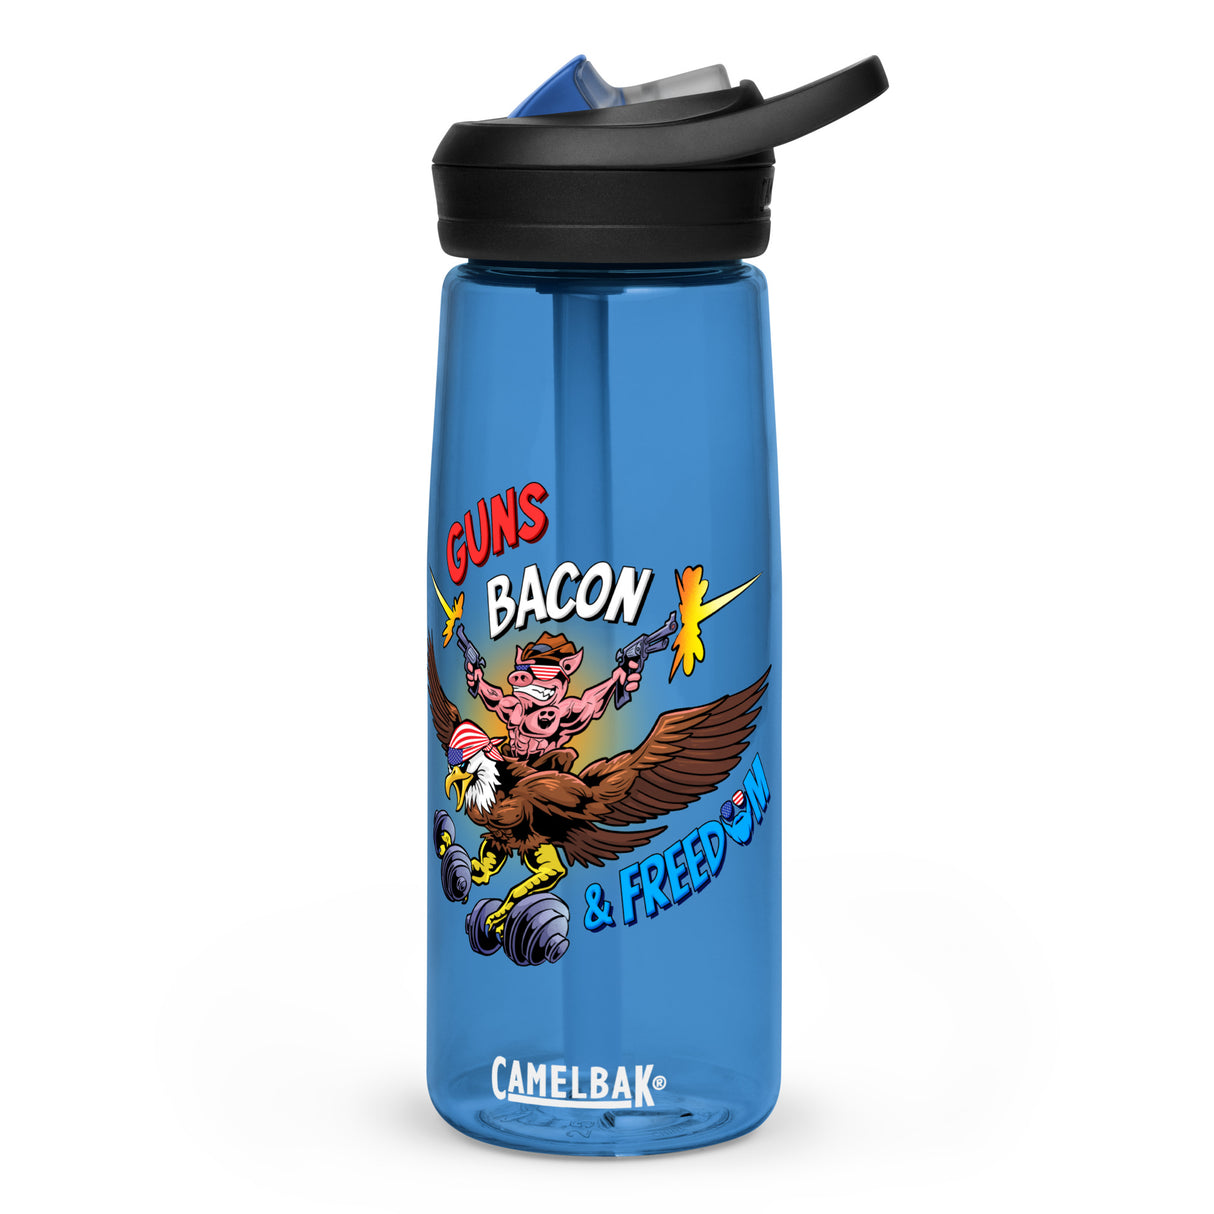 Guns, Bacon & Freedom (Image) Water Bottle